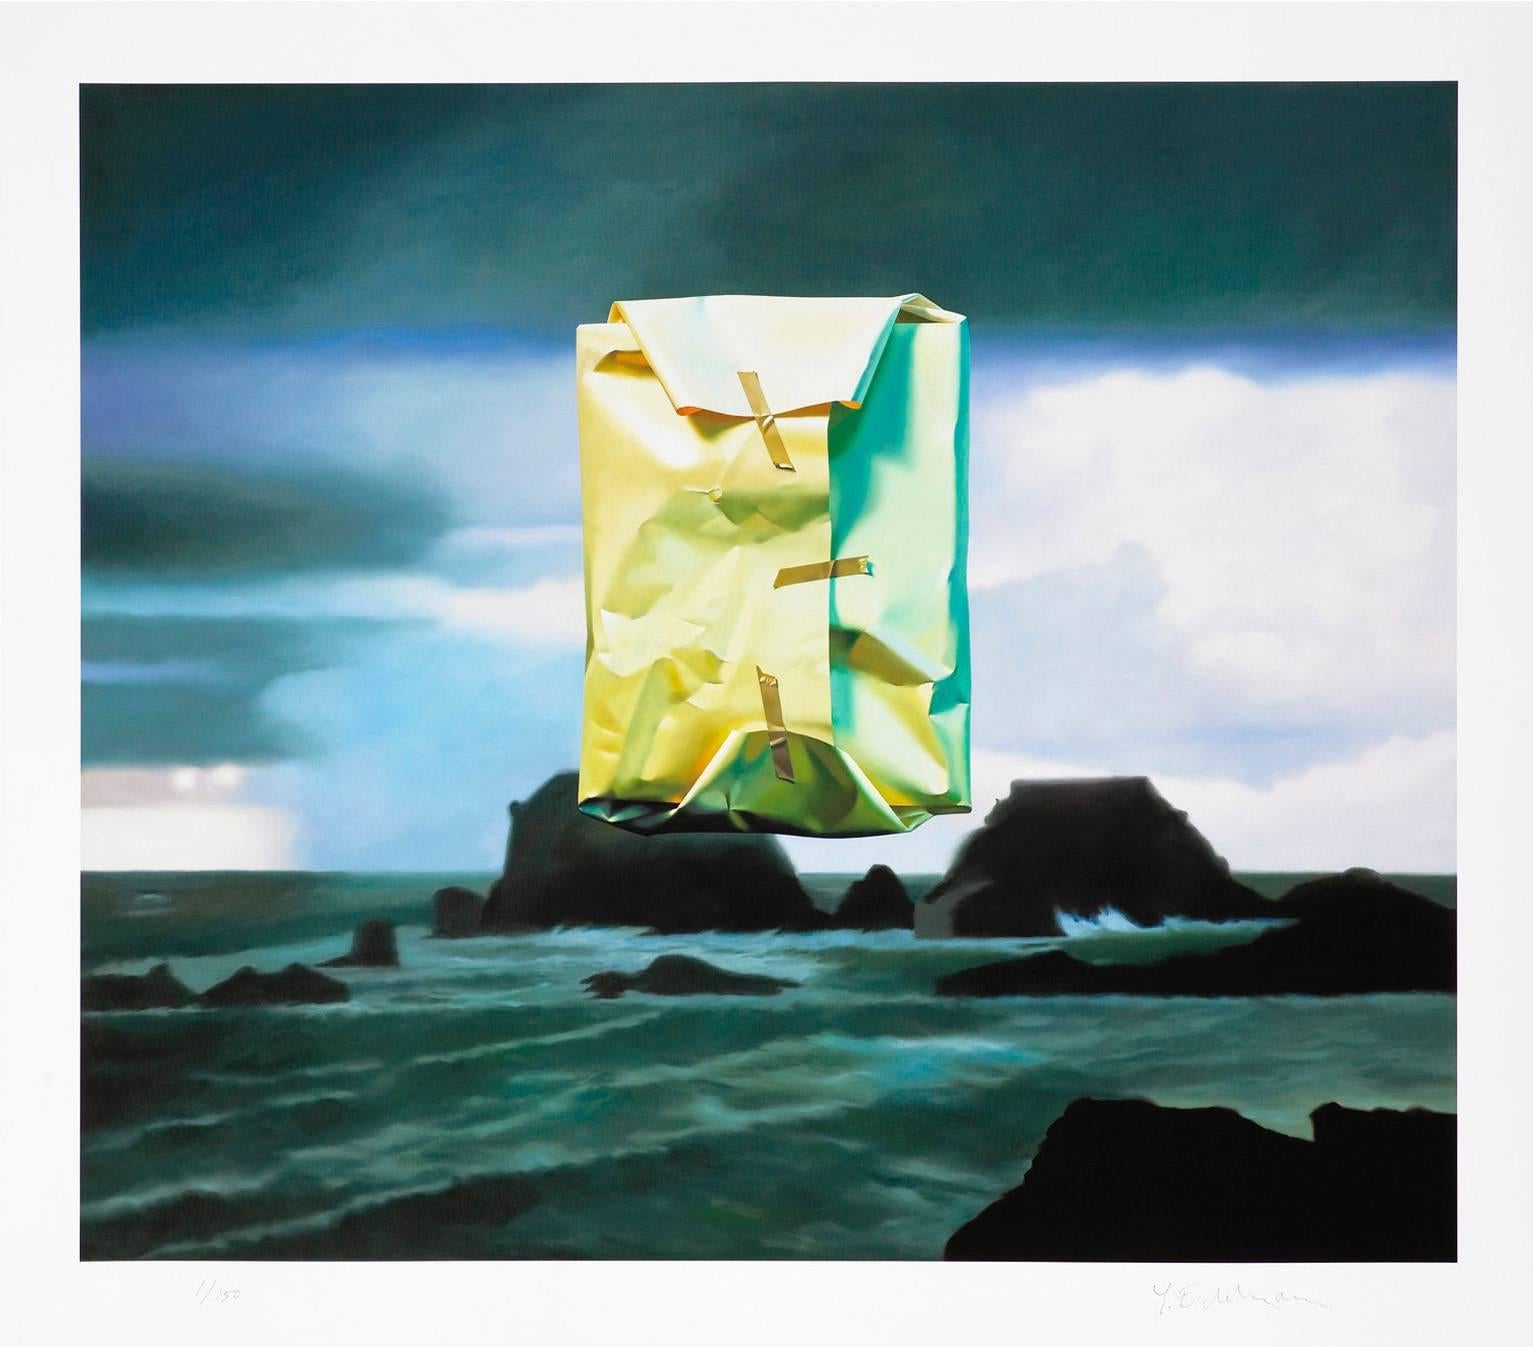 Flashlighted floated parcel in stormy ocean and sky - Print by Yrjö Edelmann